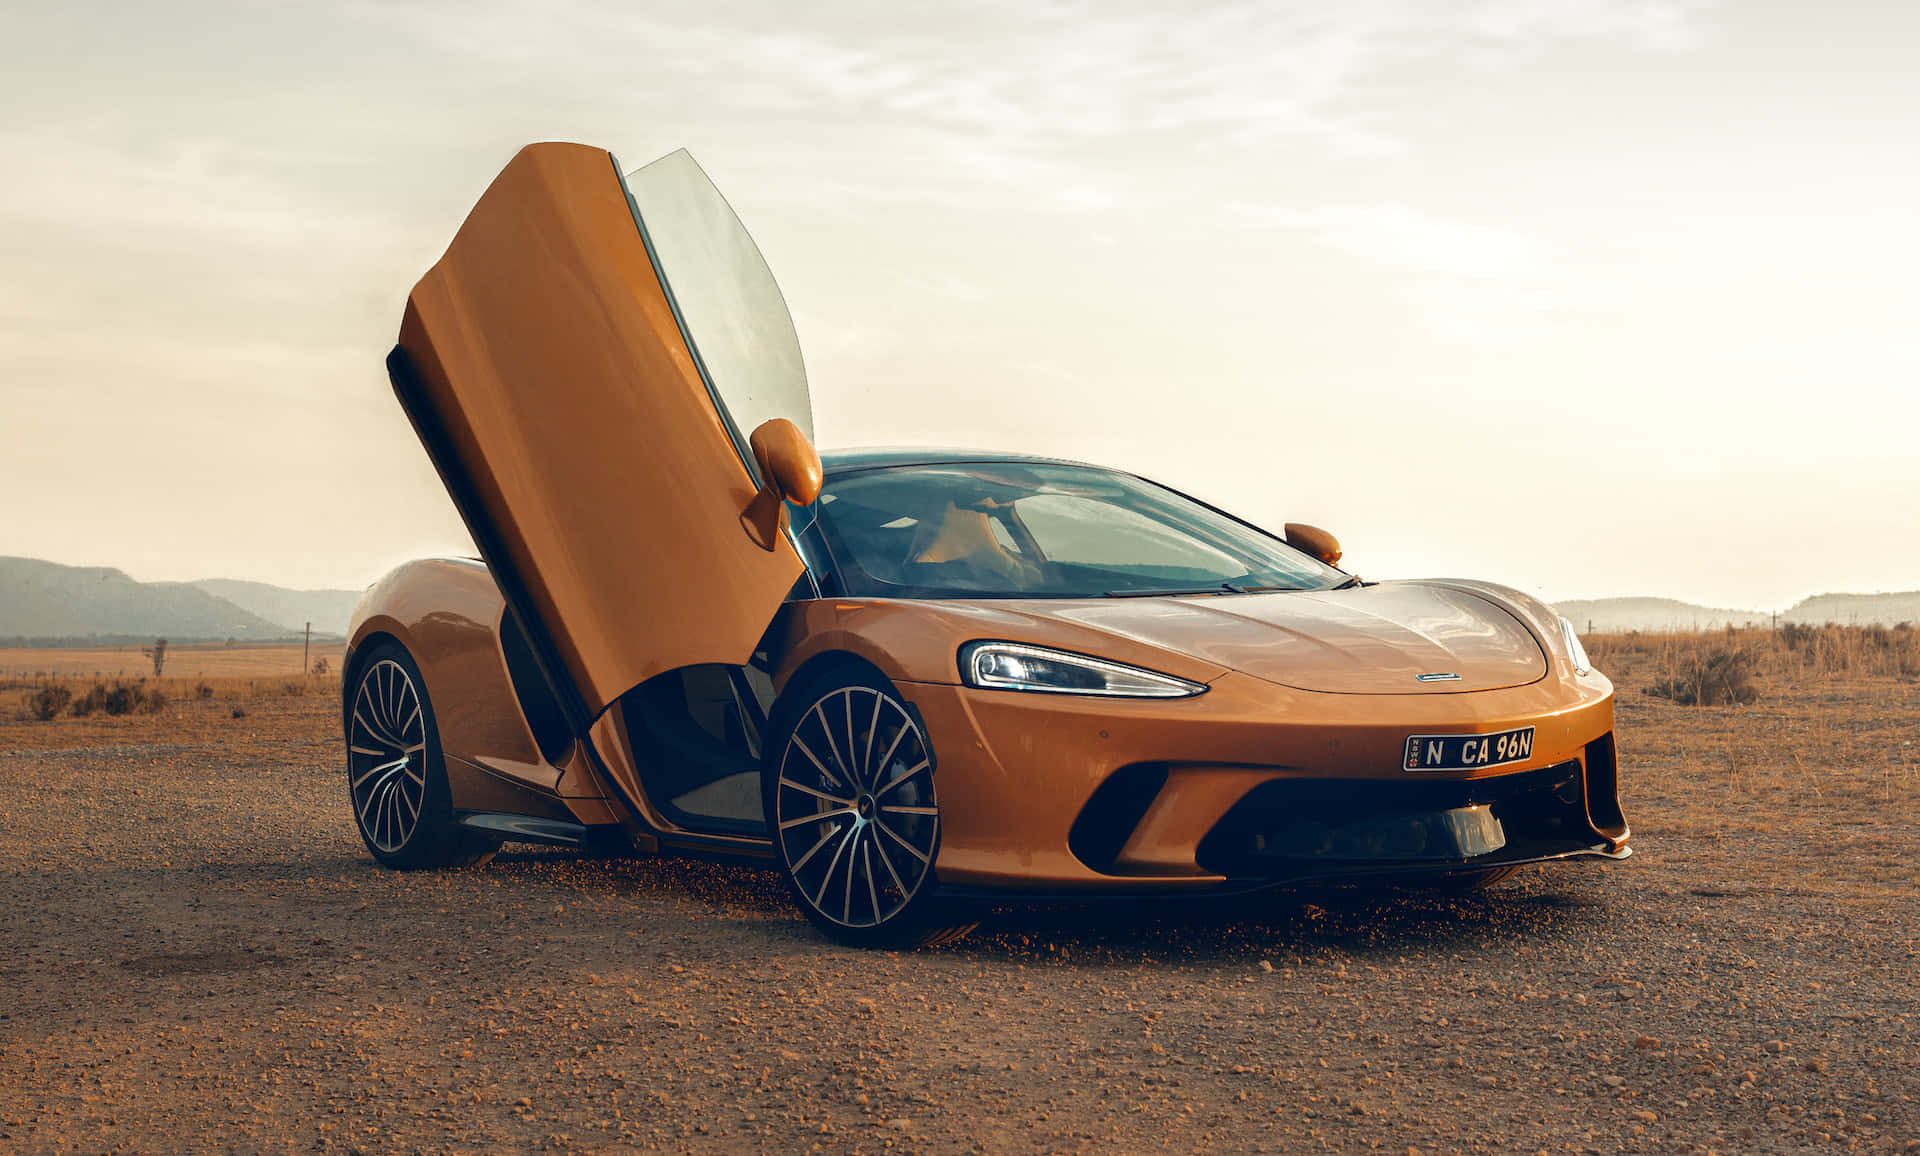 Caption: Elegance and Power - The McLaren GT Wallpaper